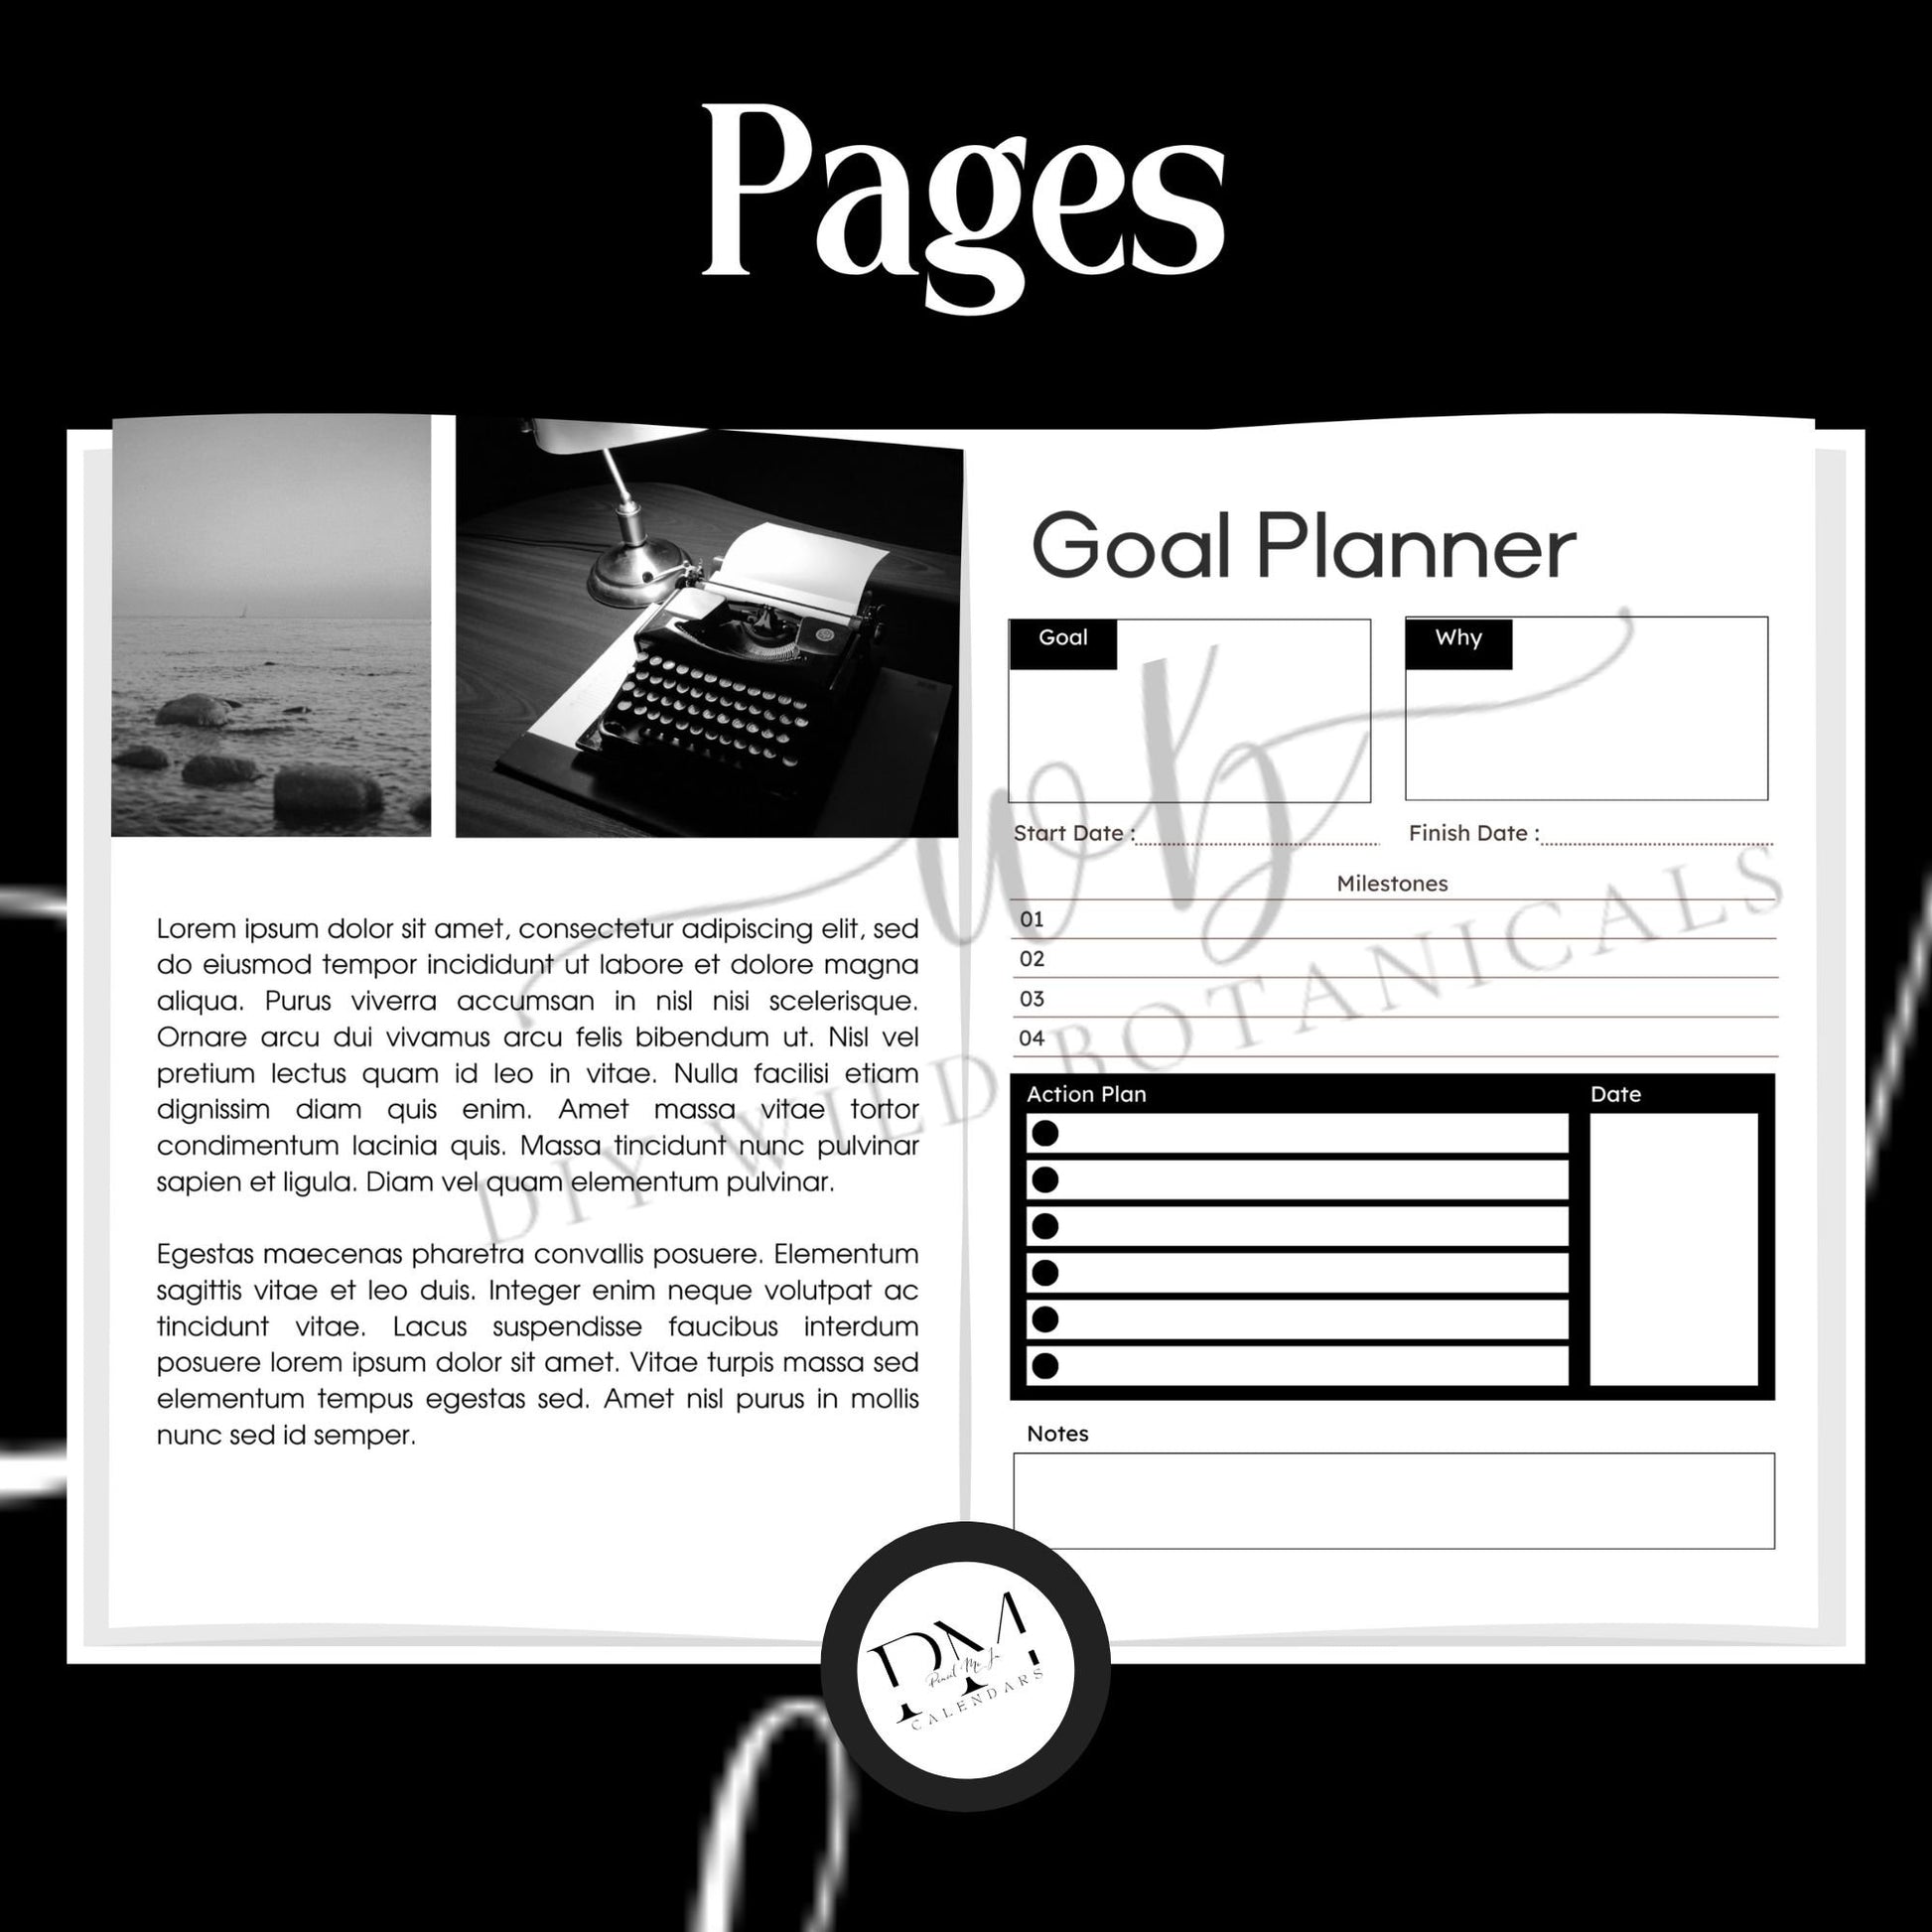 Black & White Ebook Template, Editable Coaching Workbook Template, Canva Template Course Guide Lead Magnet Luxury Brochure